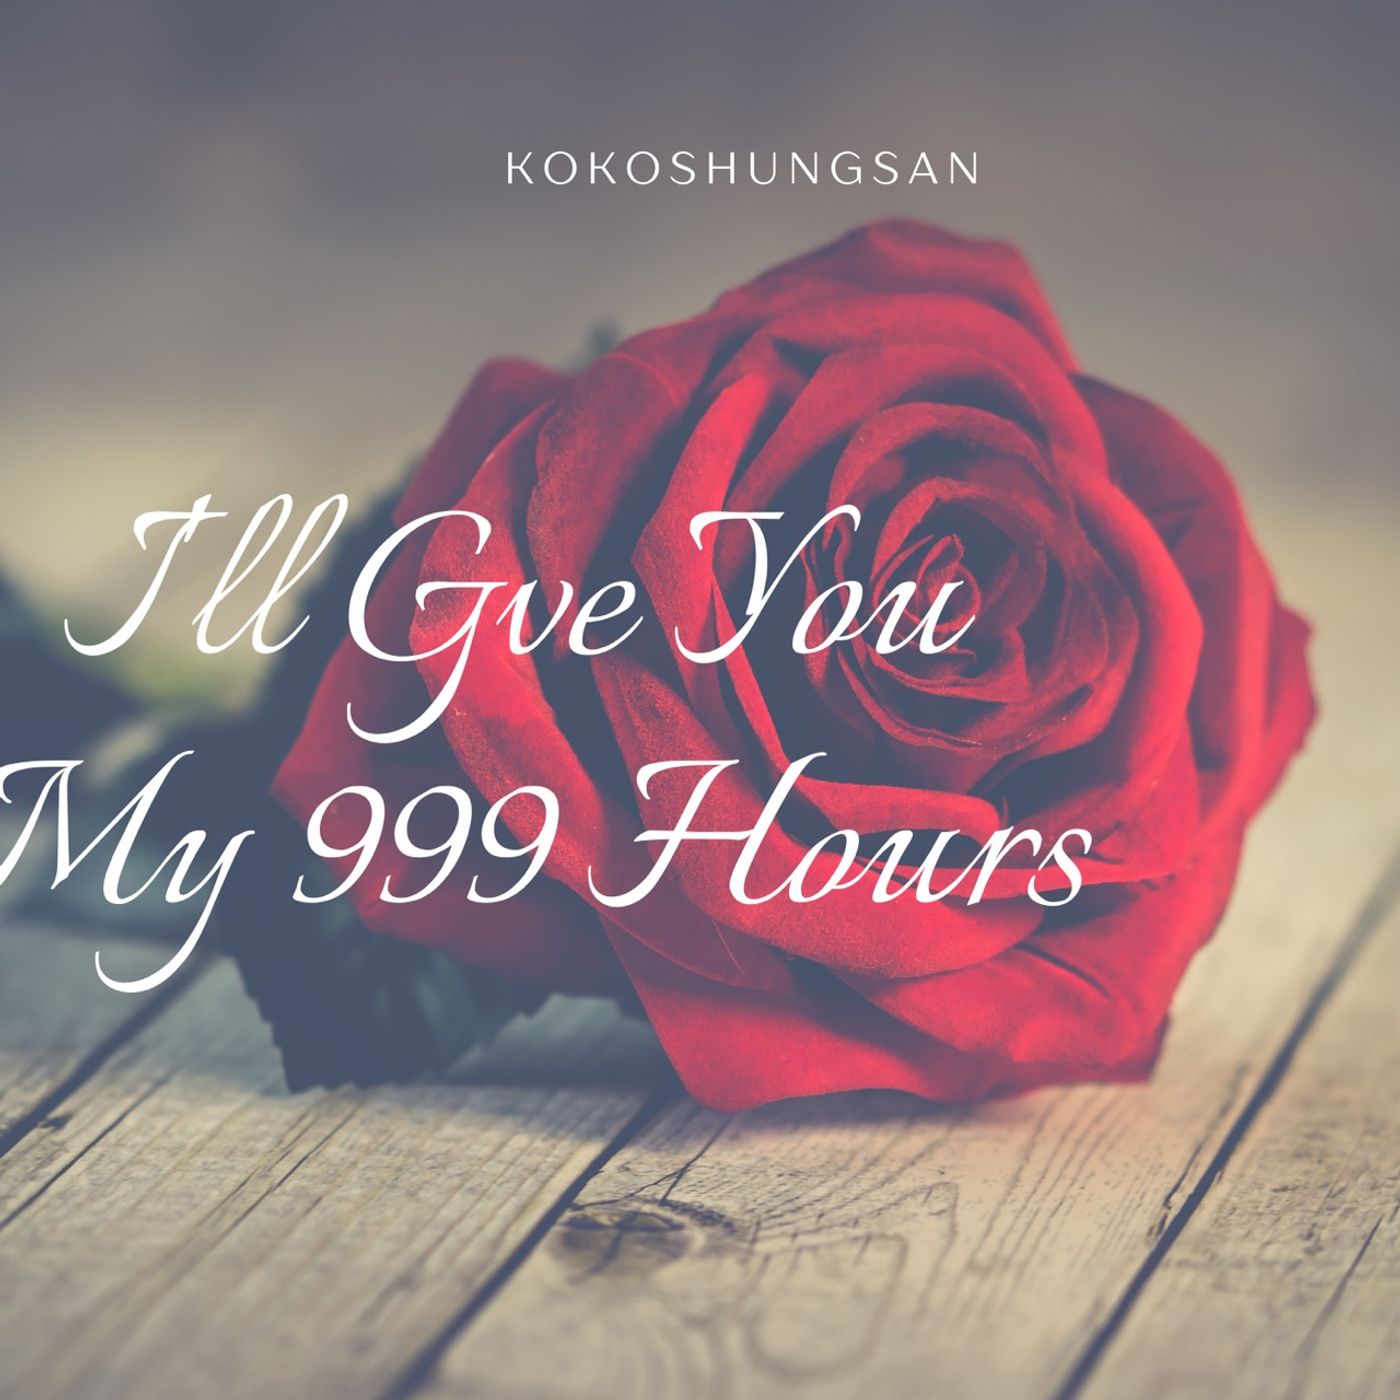 I'll Gve You My 999 Hours